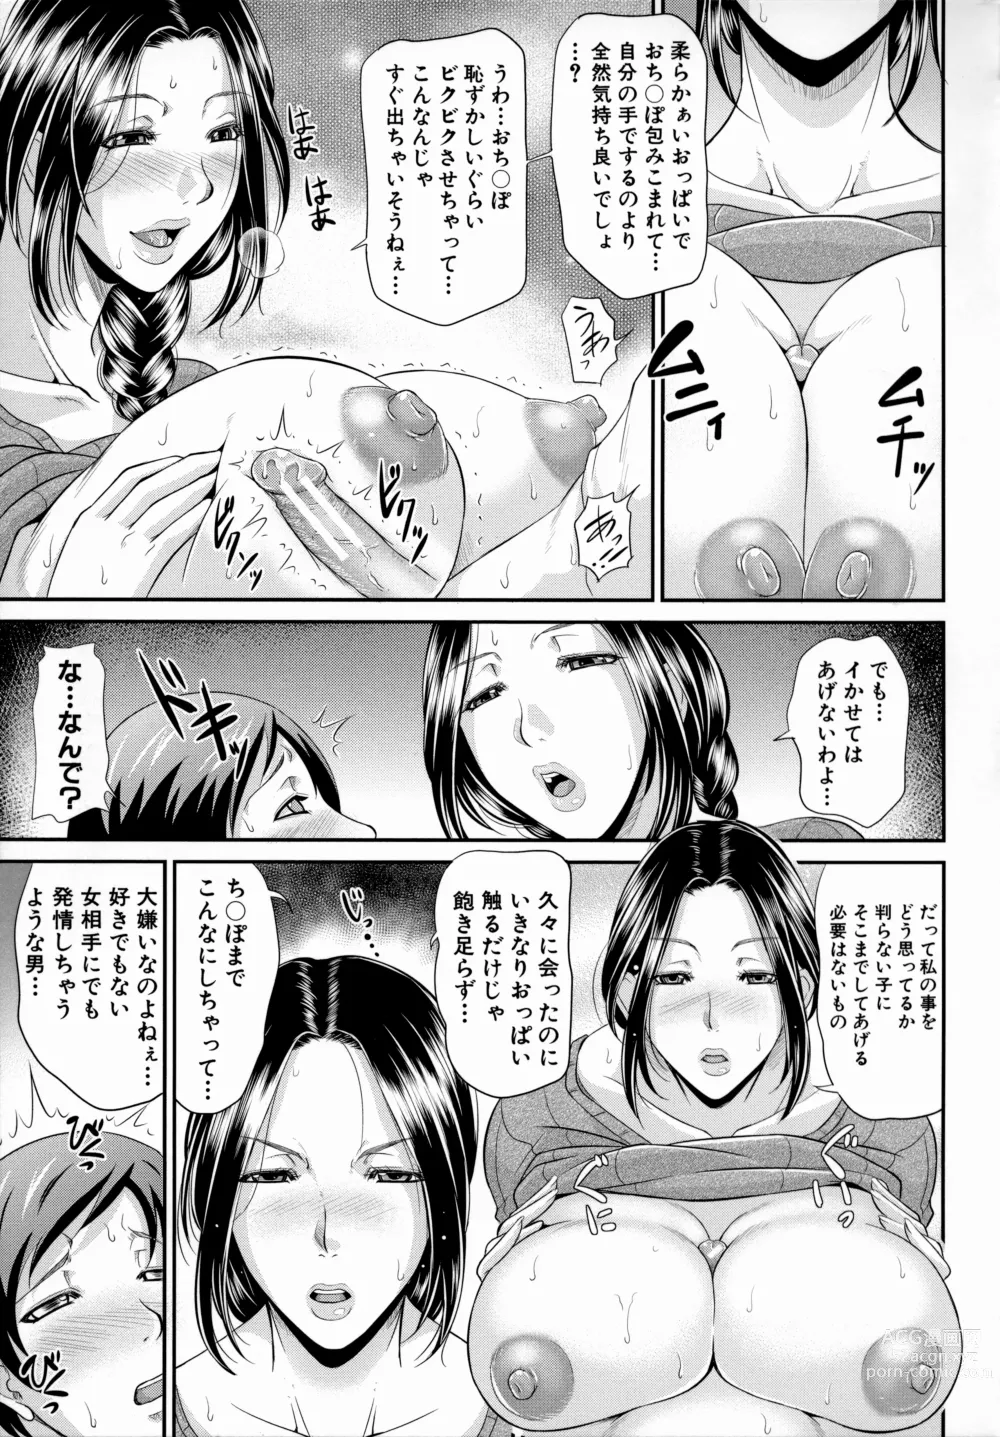 Page 179 of manga Uruwashi no Wife